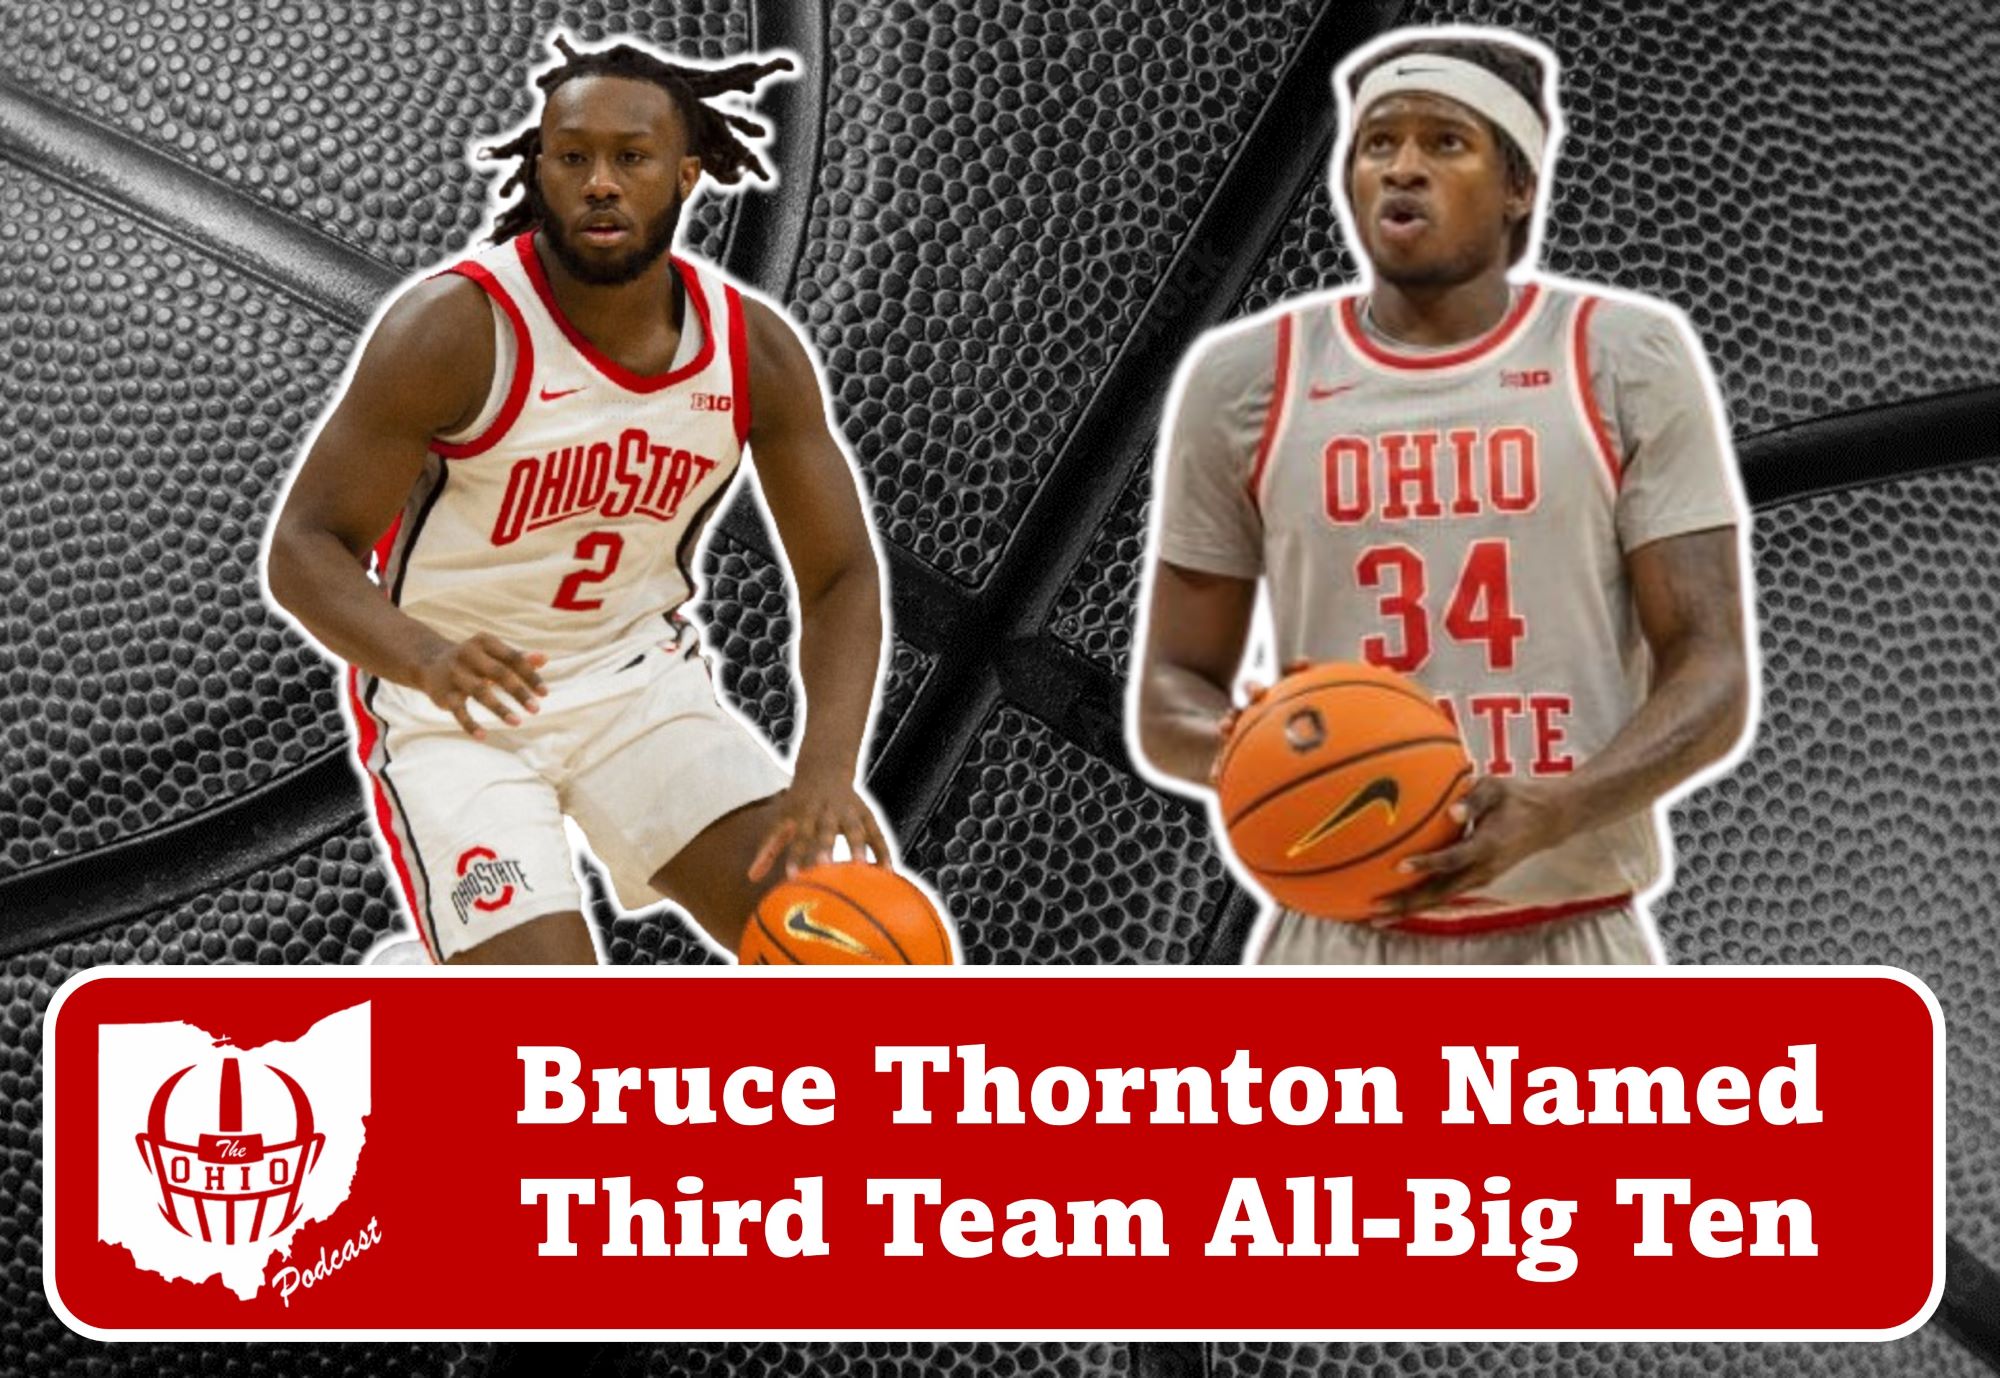 Bruce Thornton Named Third Team All-Big Ten